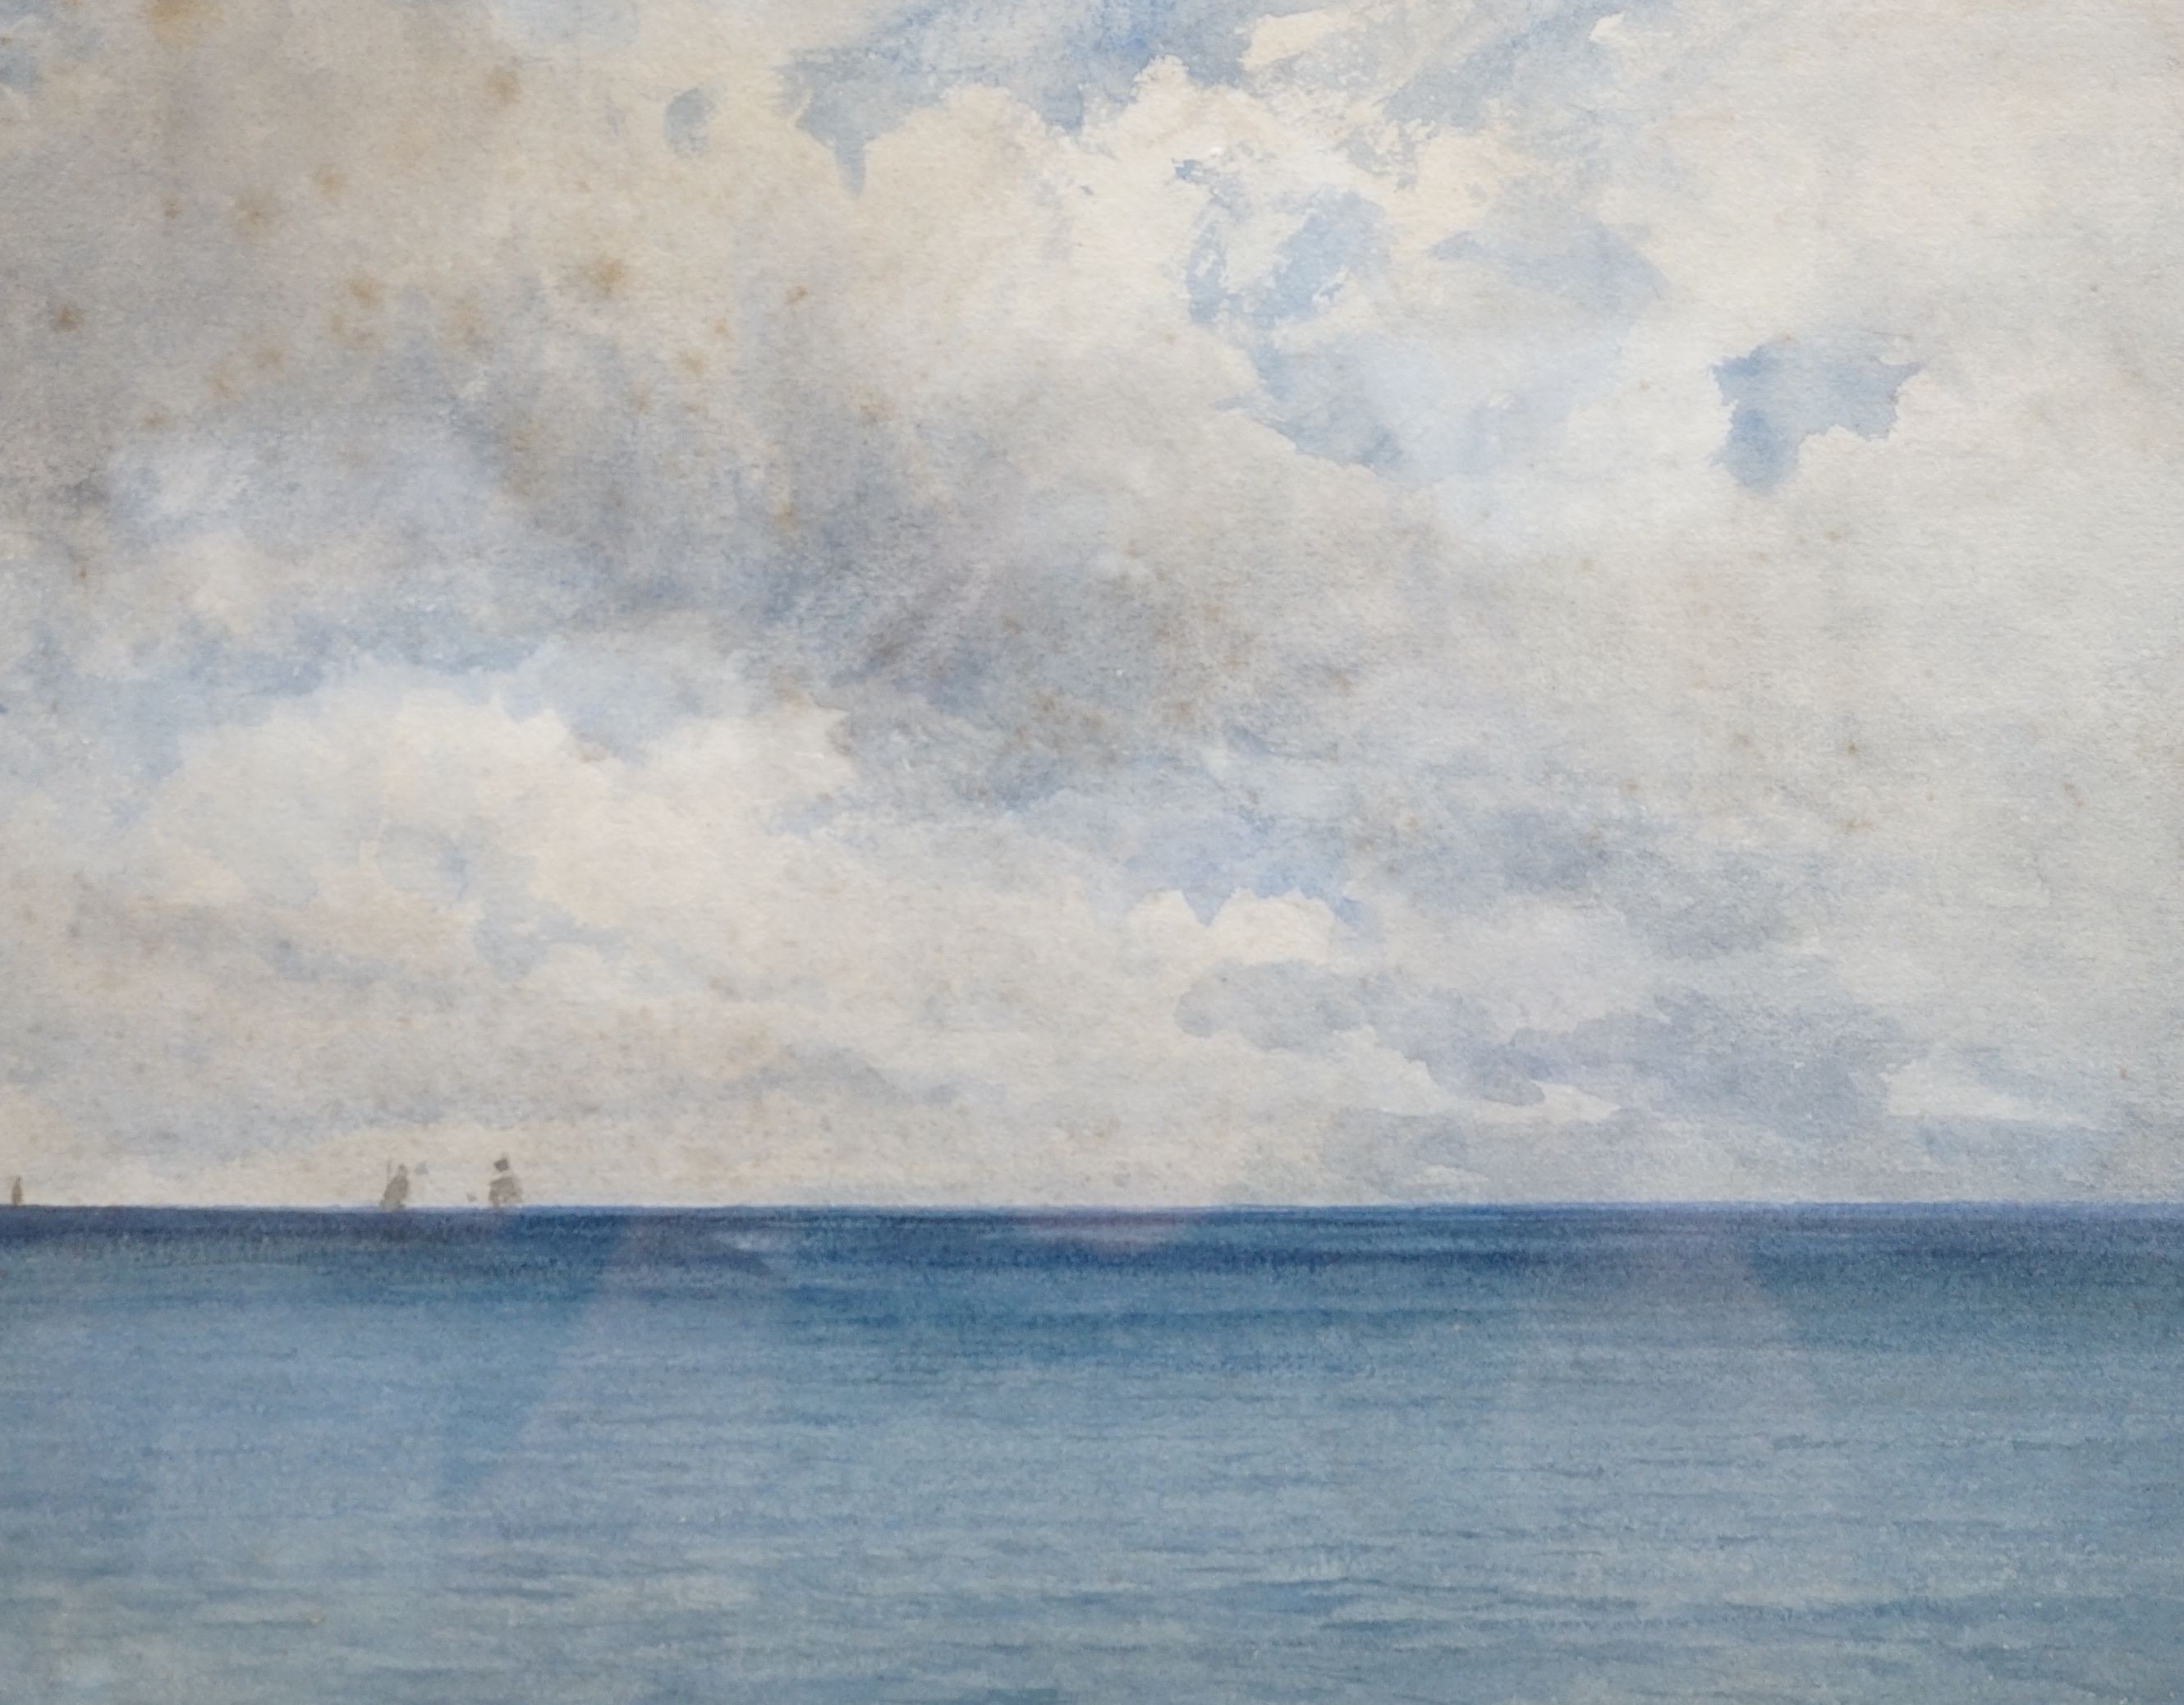 Laurence Burd (1848-1898), View near Llandudno, watercolour, 25 x 32cm